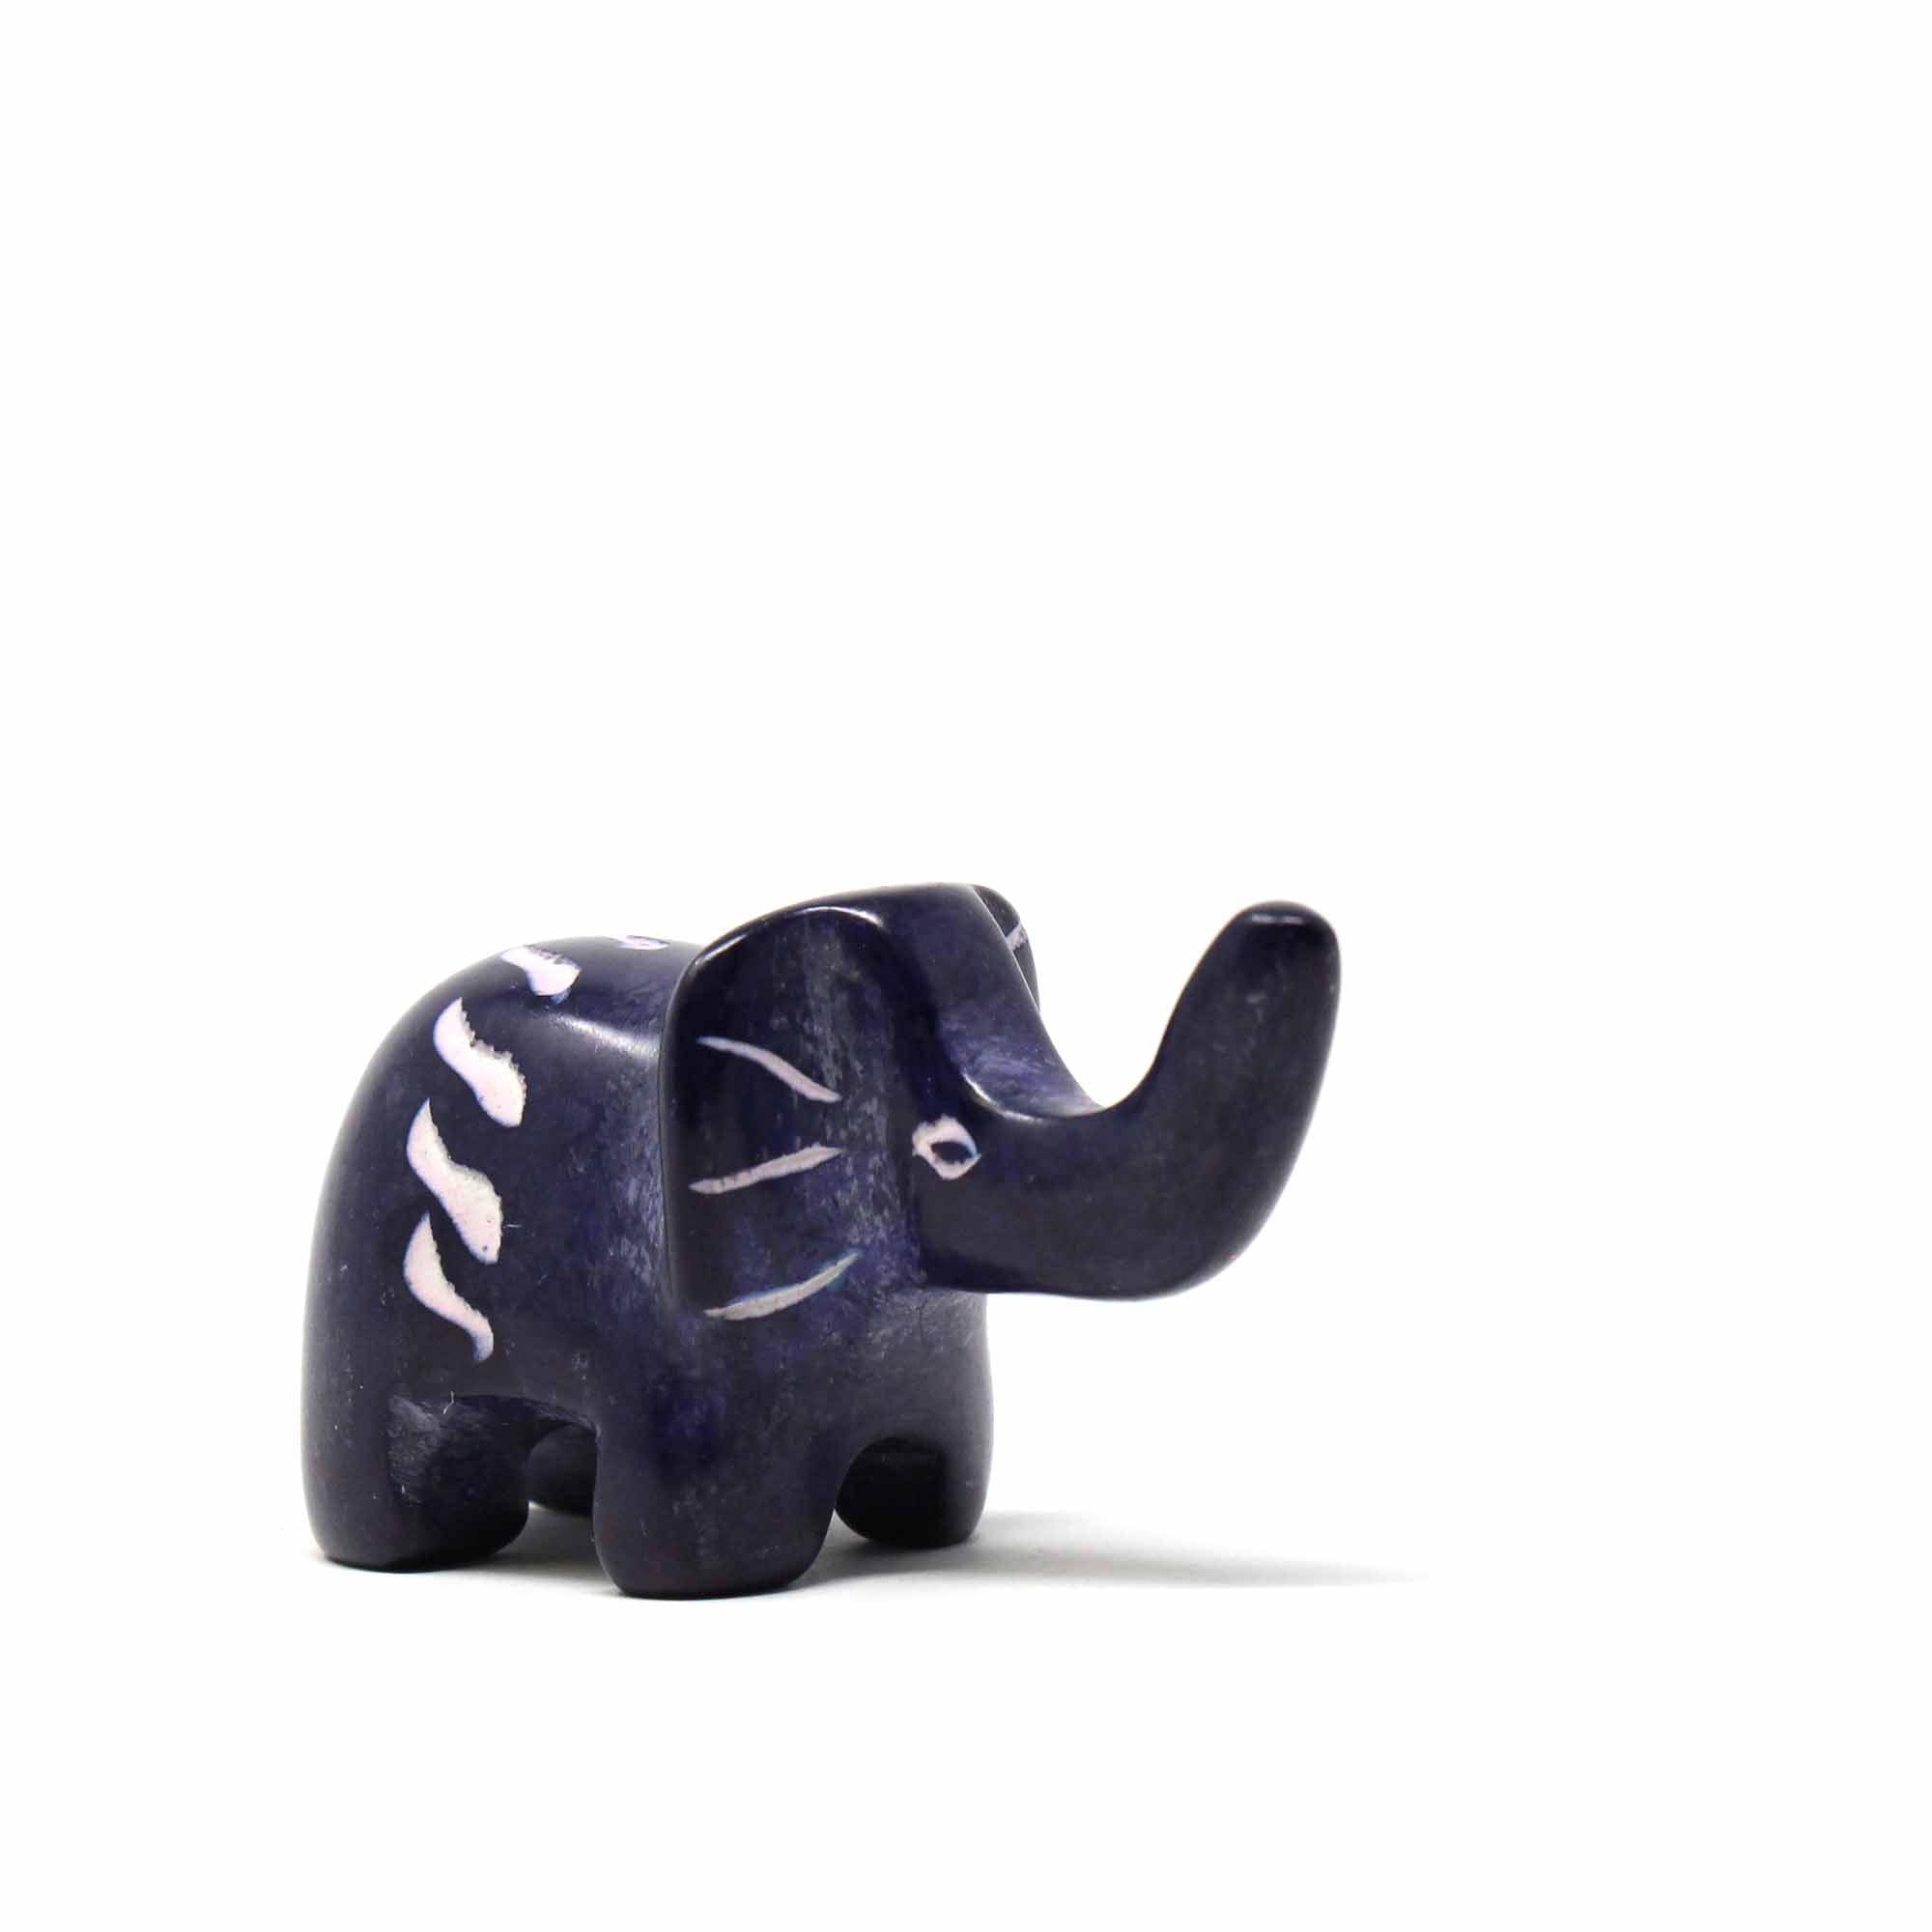 Soapstone Tiny Elephants - Assorted Pack of 5 Colors - Flyclothing LLC